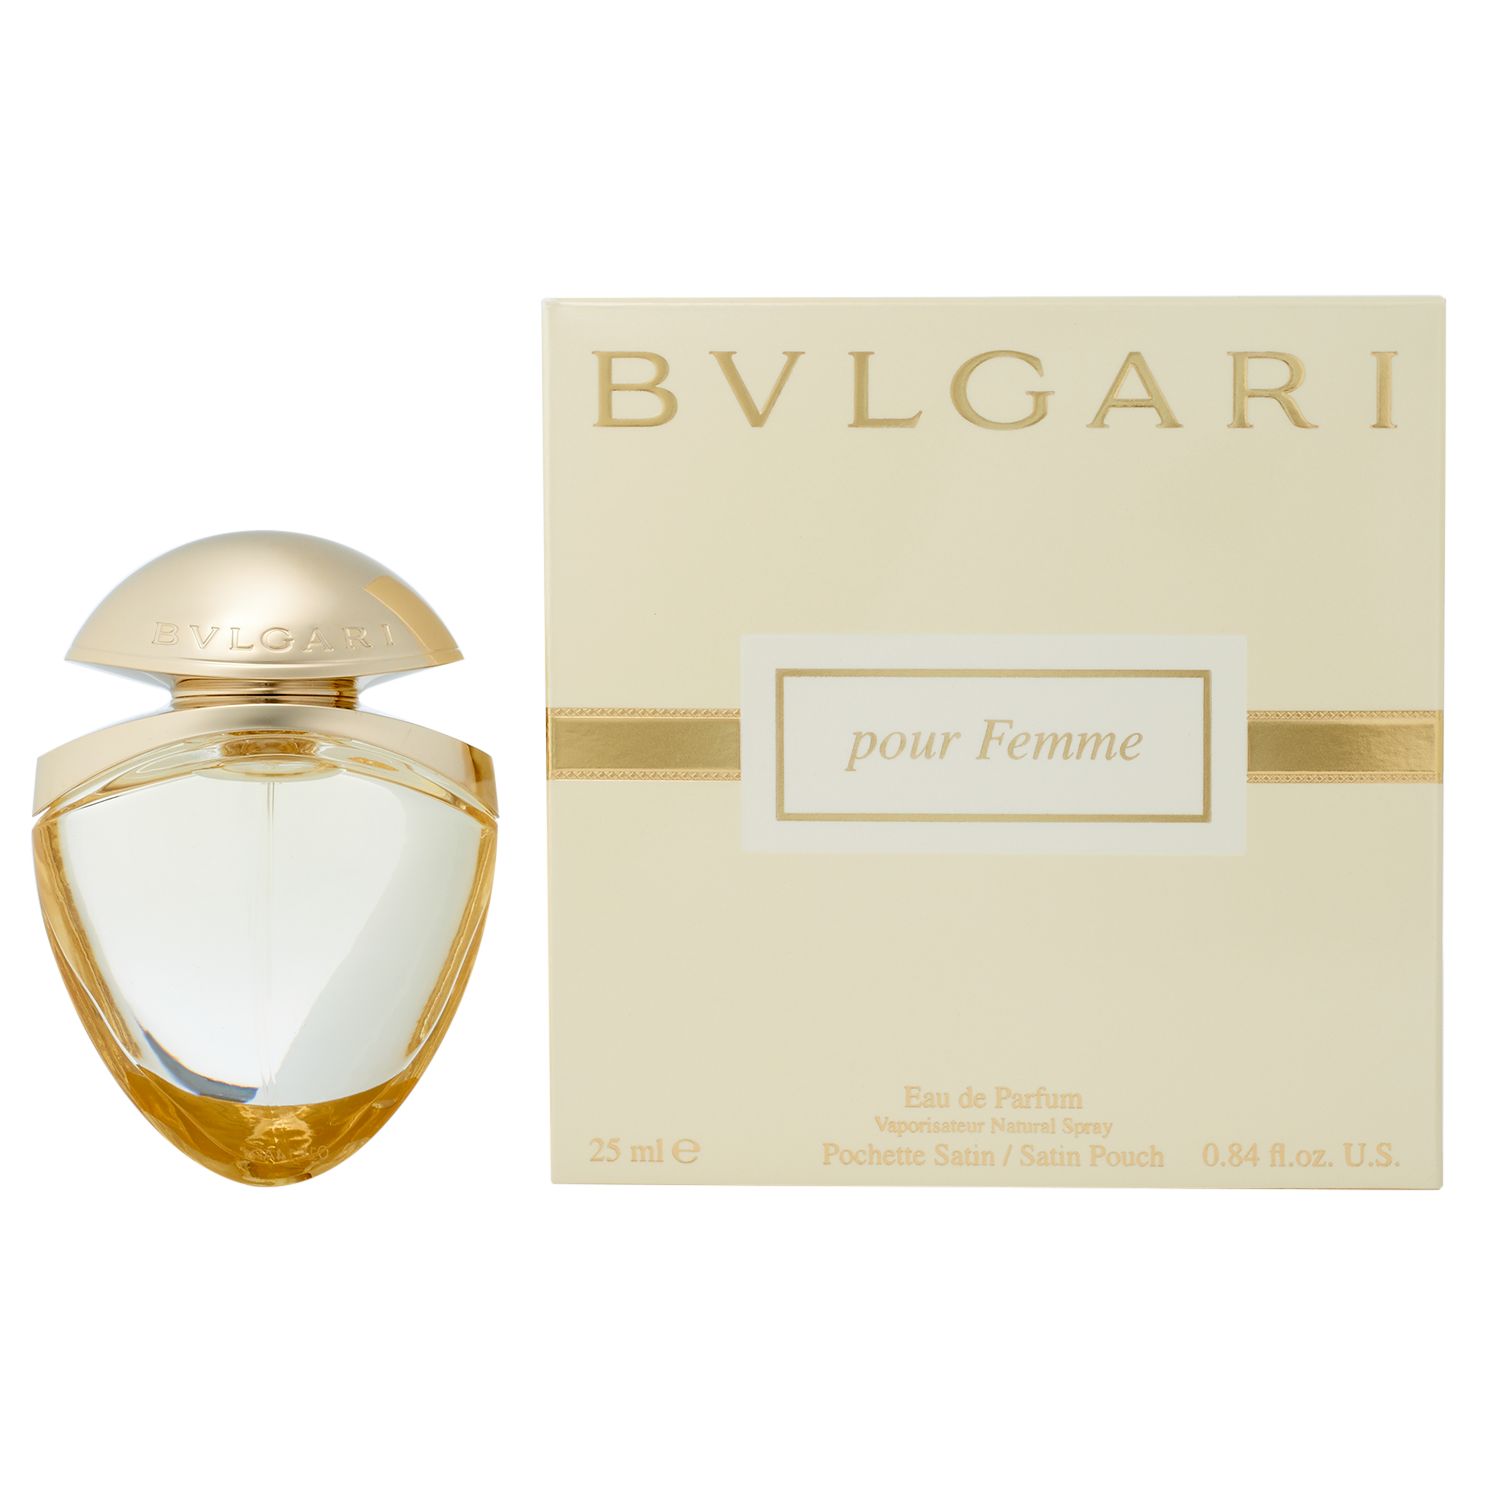 bvlgari charms perfume